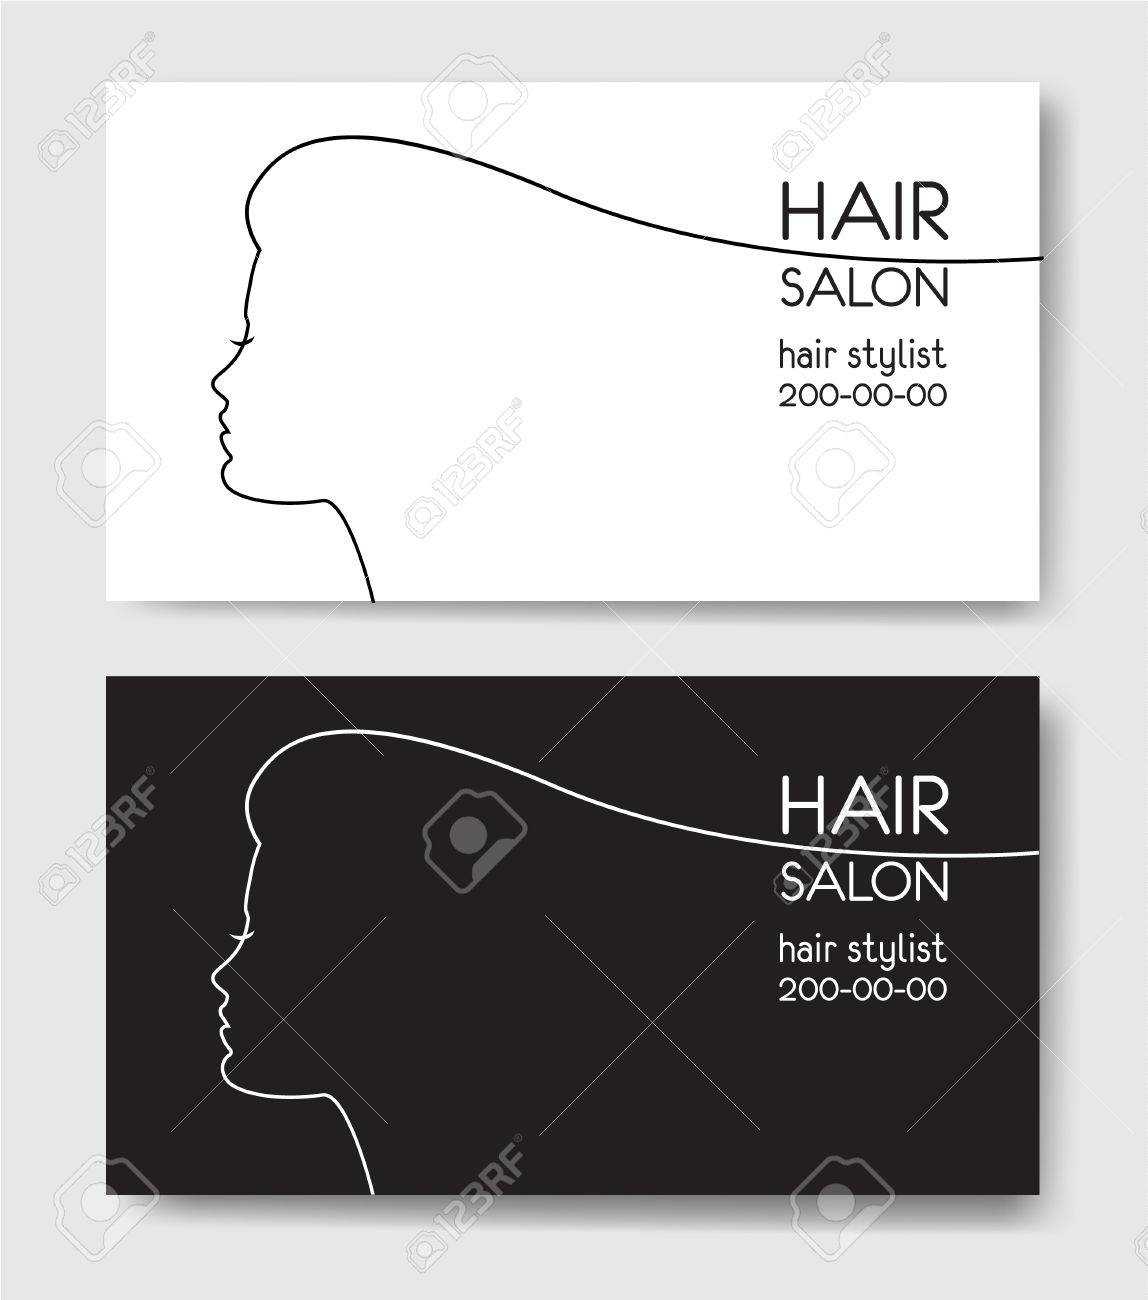 Hair Salon Business Card Templates. Regarding Hair Salon Business Card Template